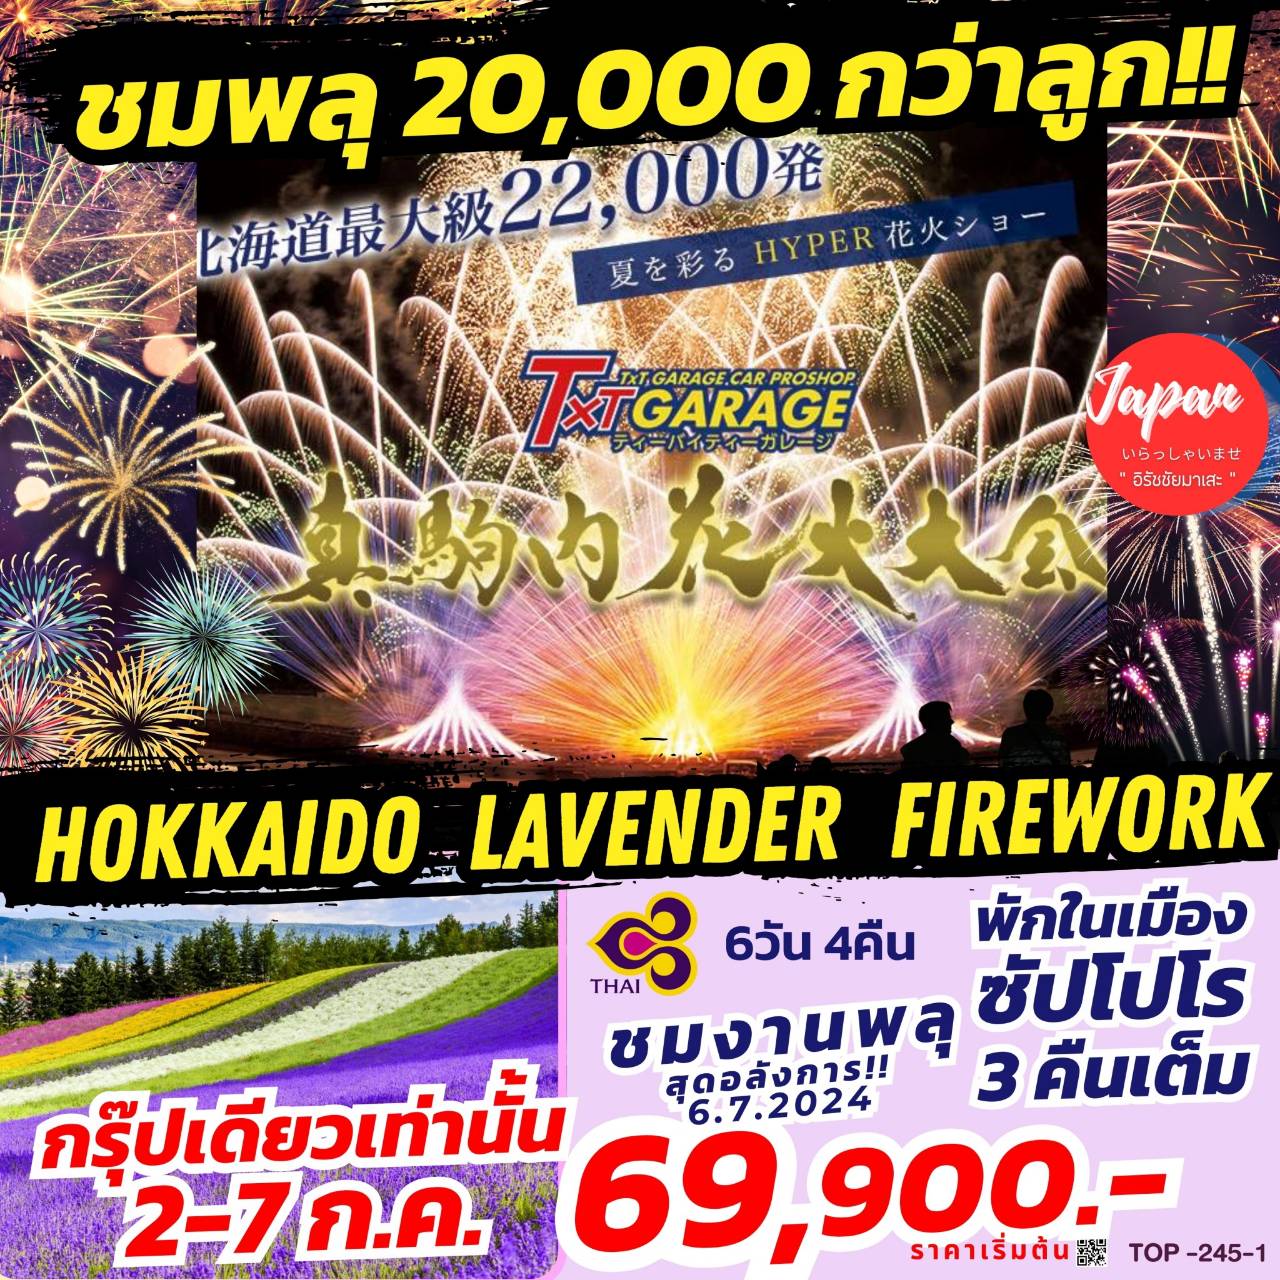 HOKKAIDO LAVENDER FIREWORK 6 DAY 4 NIGHT BY THAI AIRWAYS 